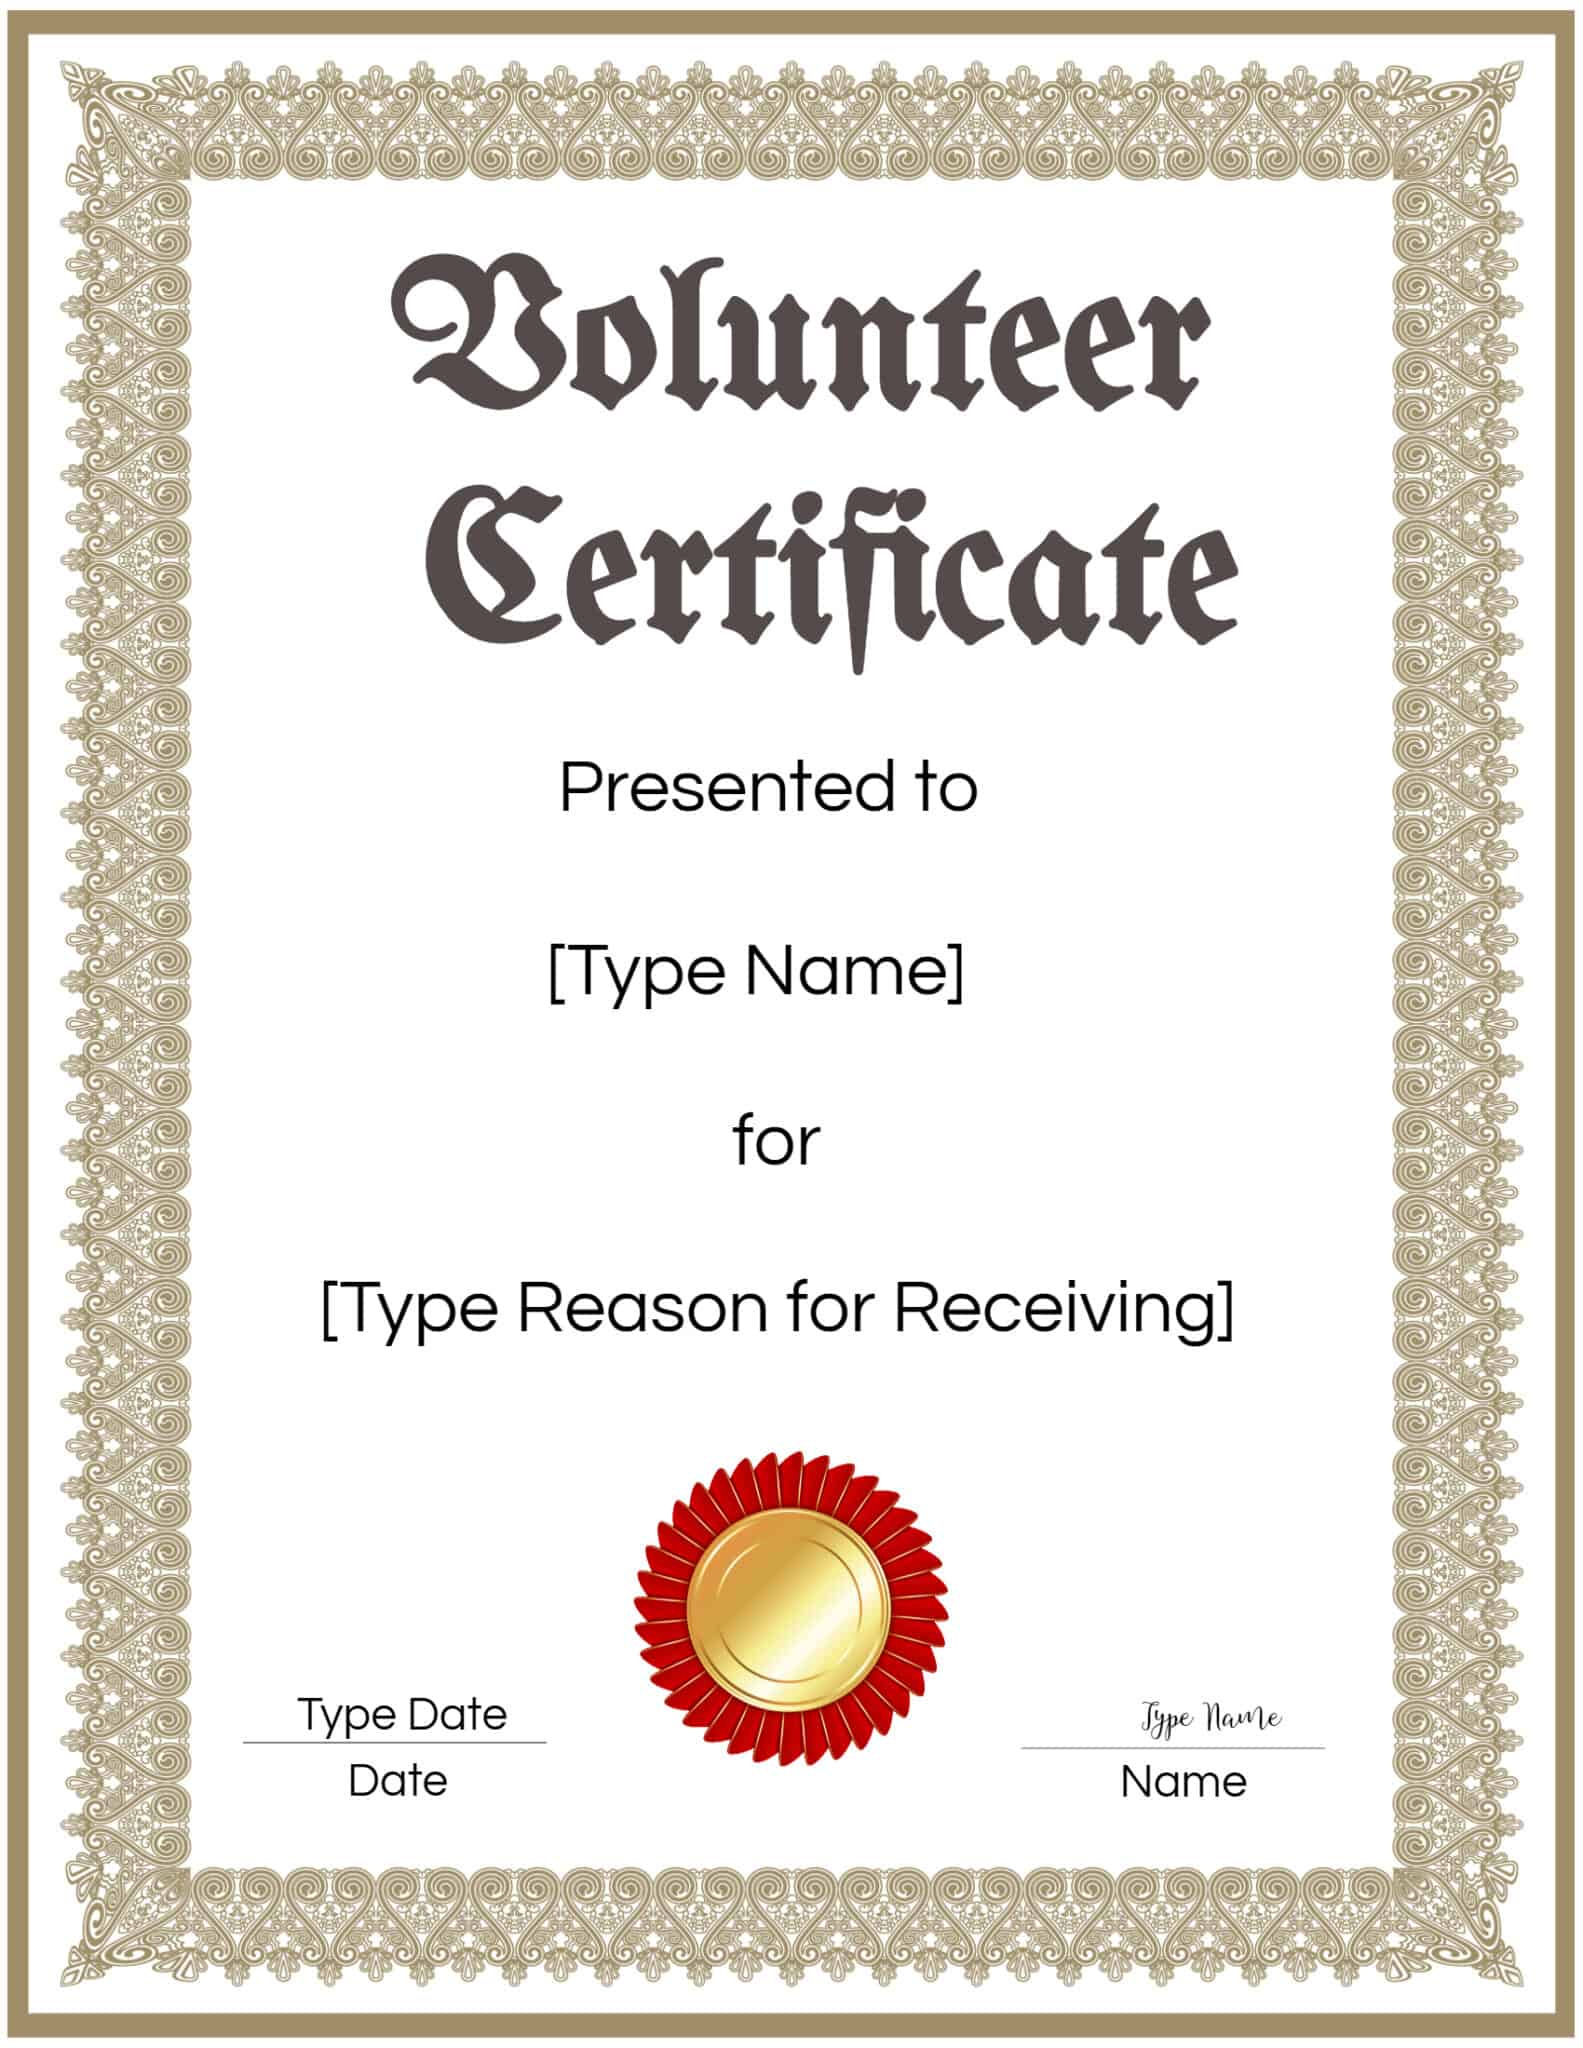 Free Volunteer Certificate Template | Many Designs Are Available with Volunteer Certificate Template